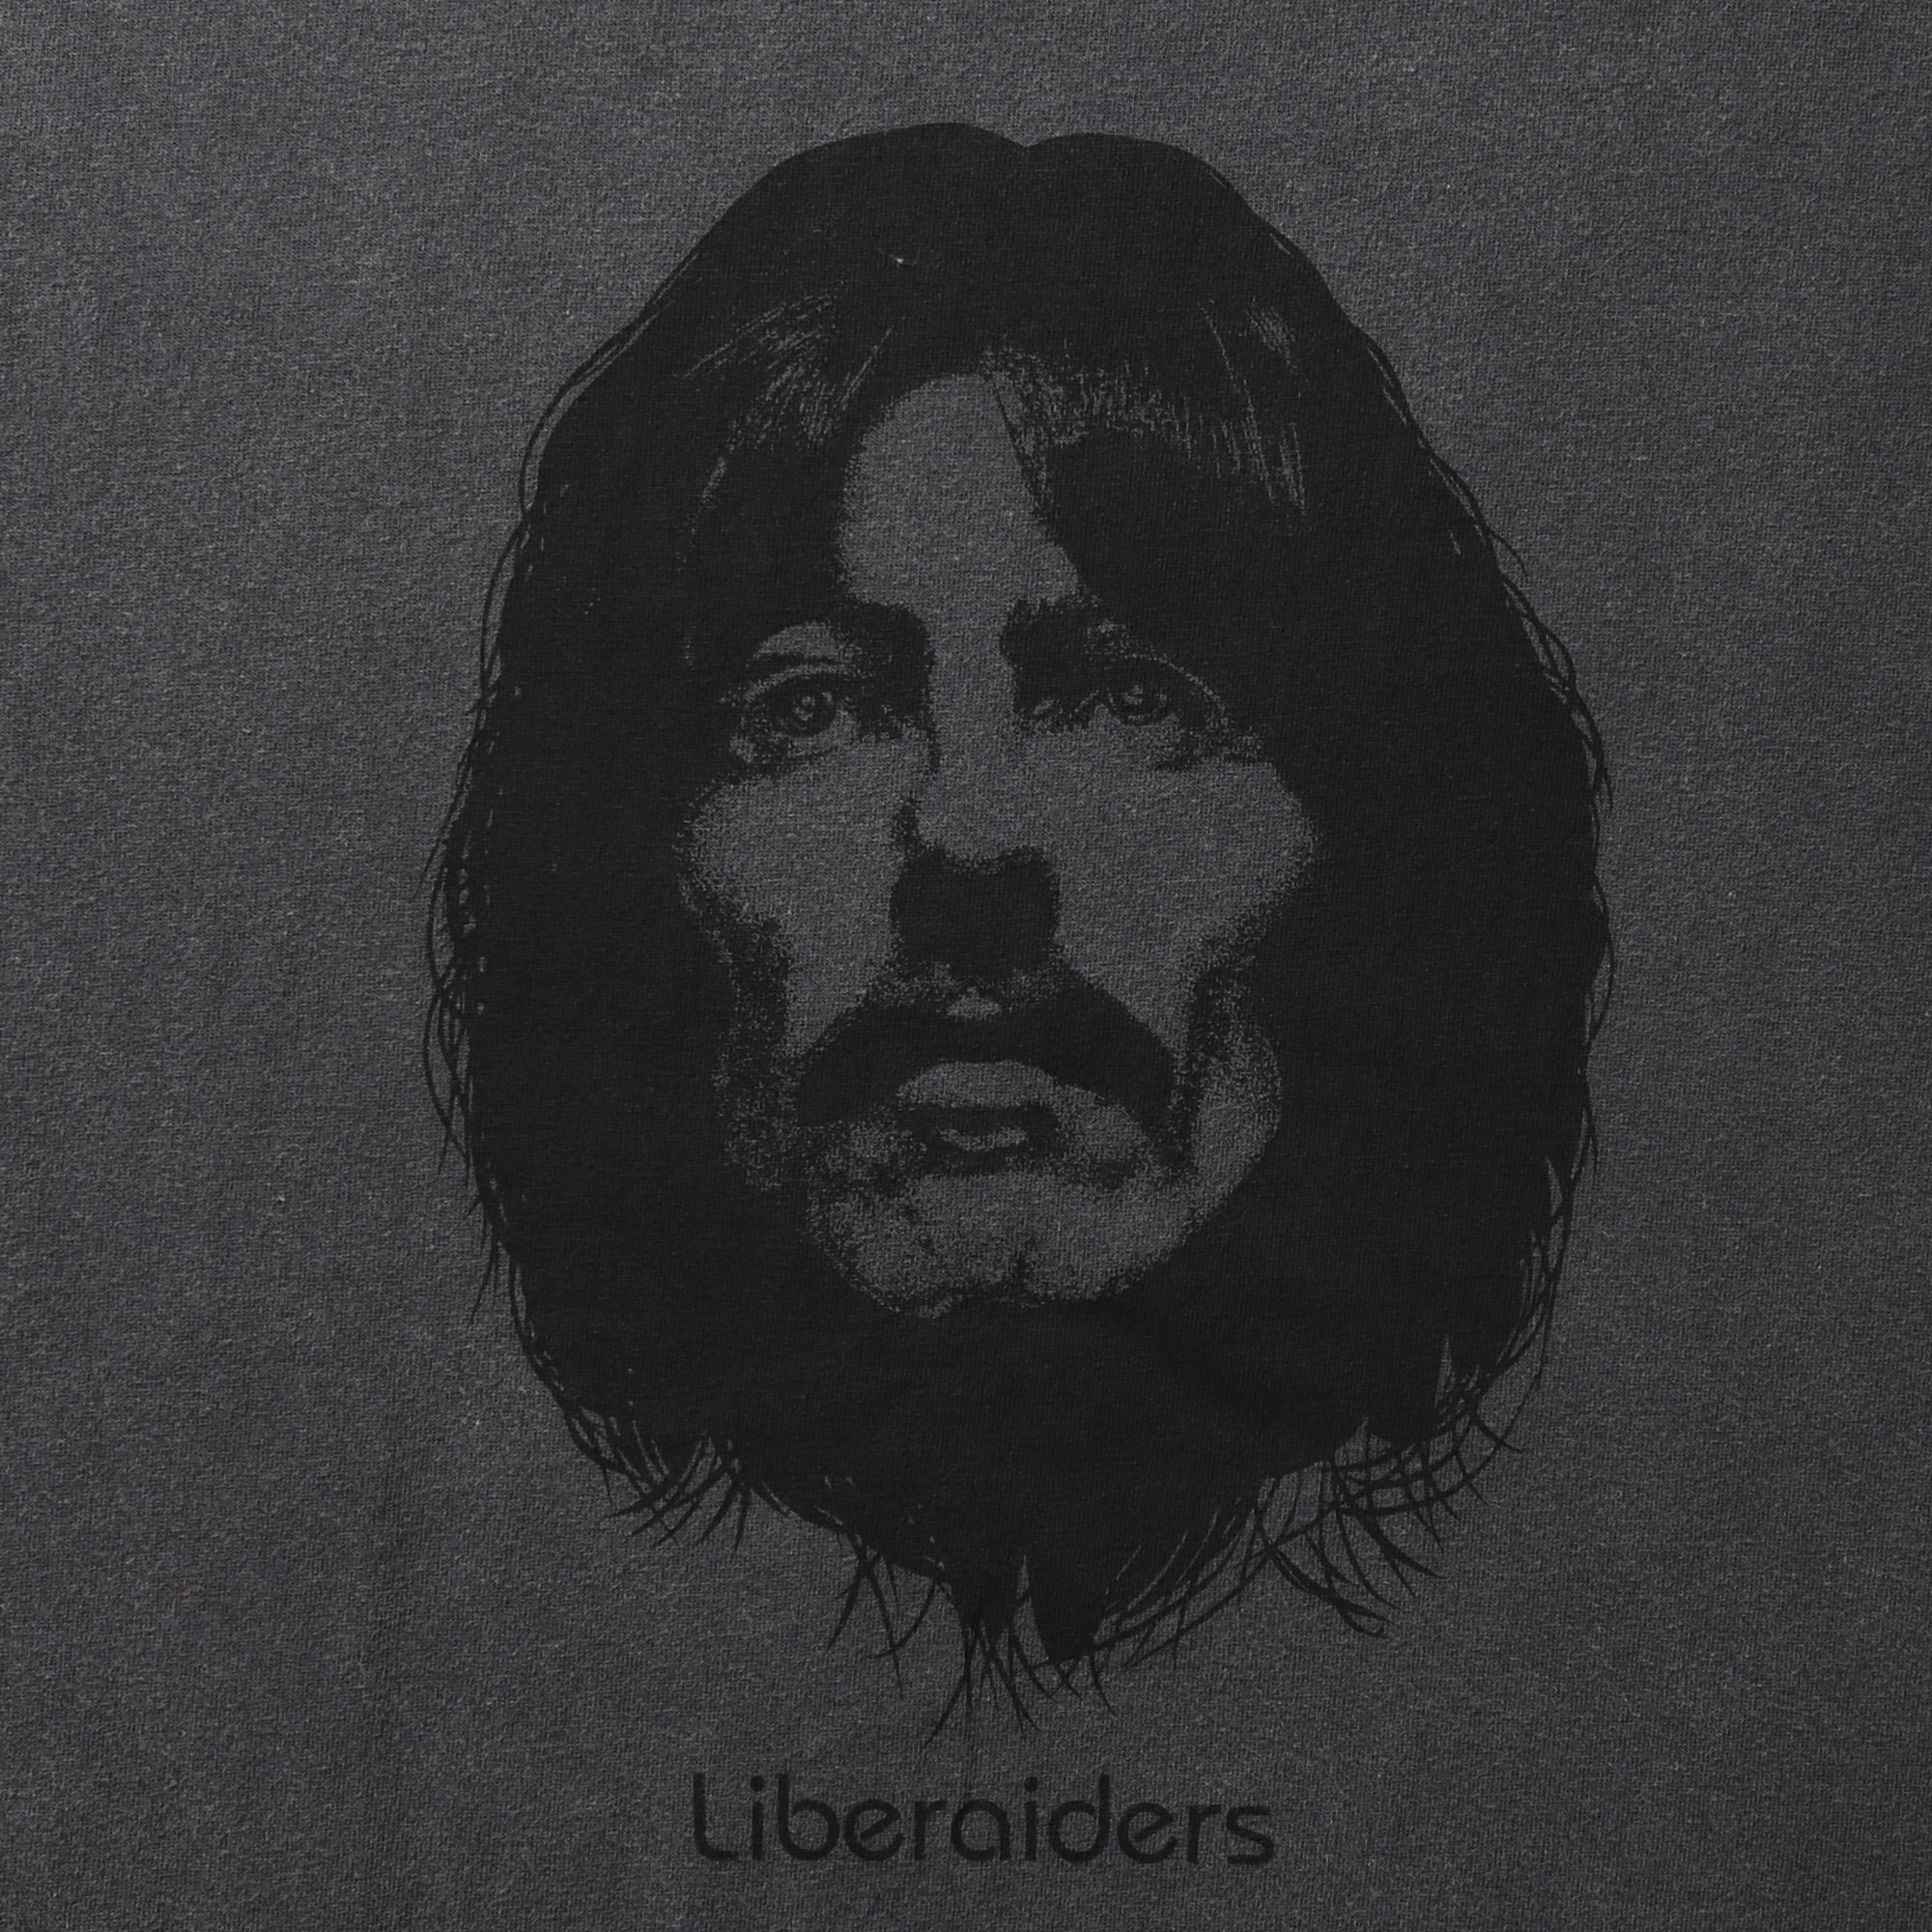 Liberaiders / 1971 TEE